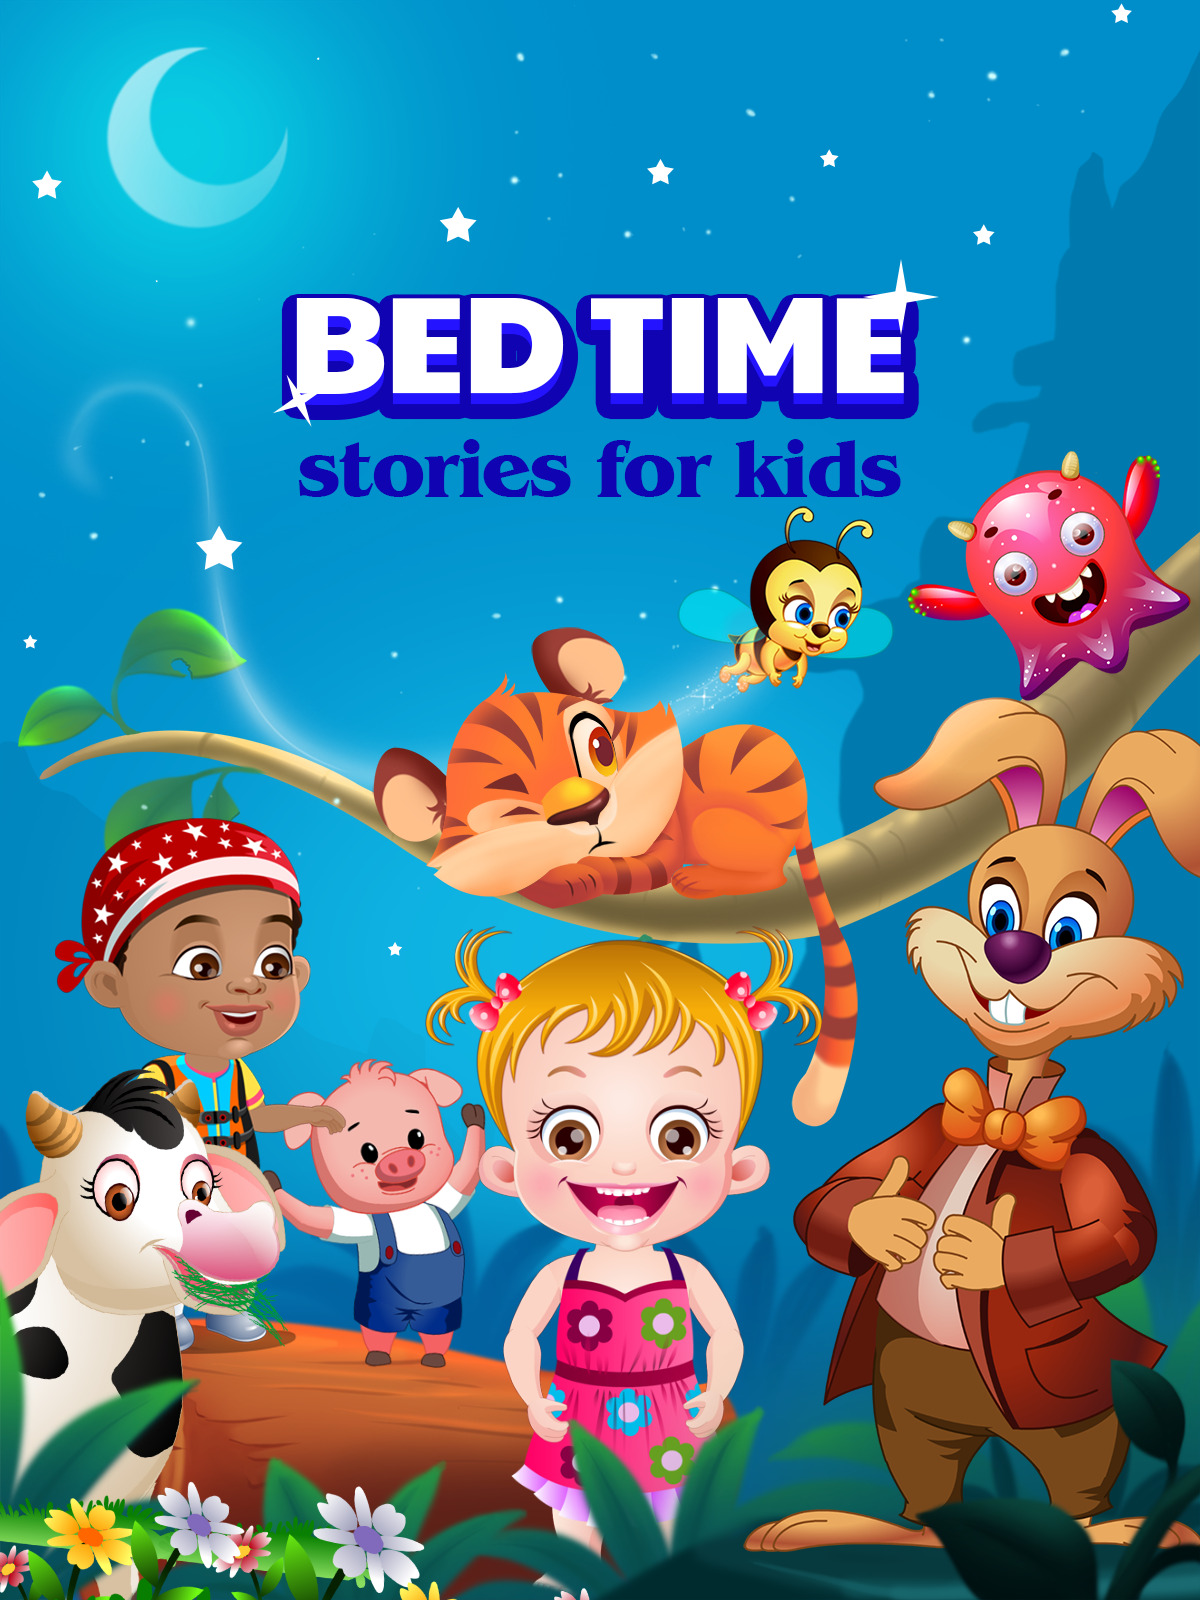 chipper douglas recommends Bedtime Stories Watch Online